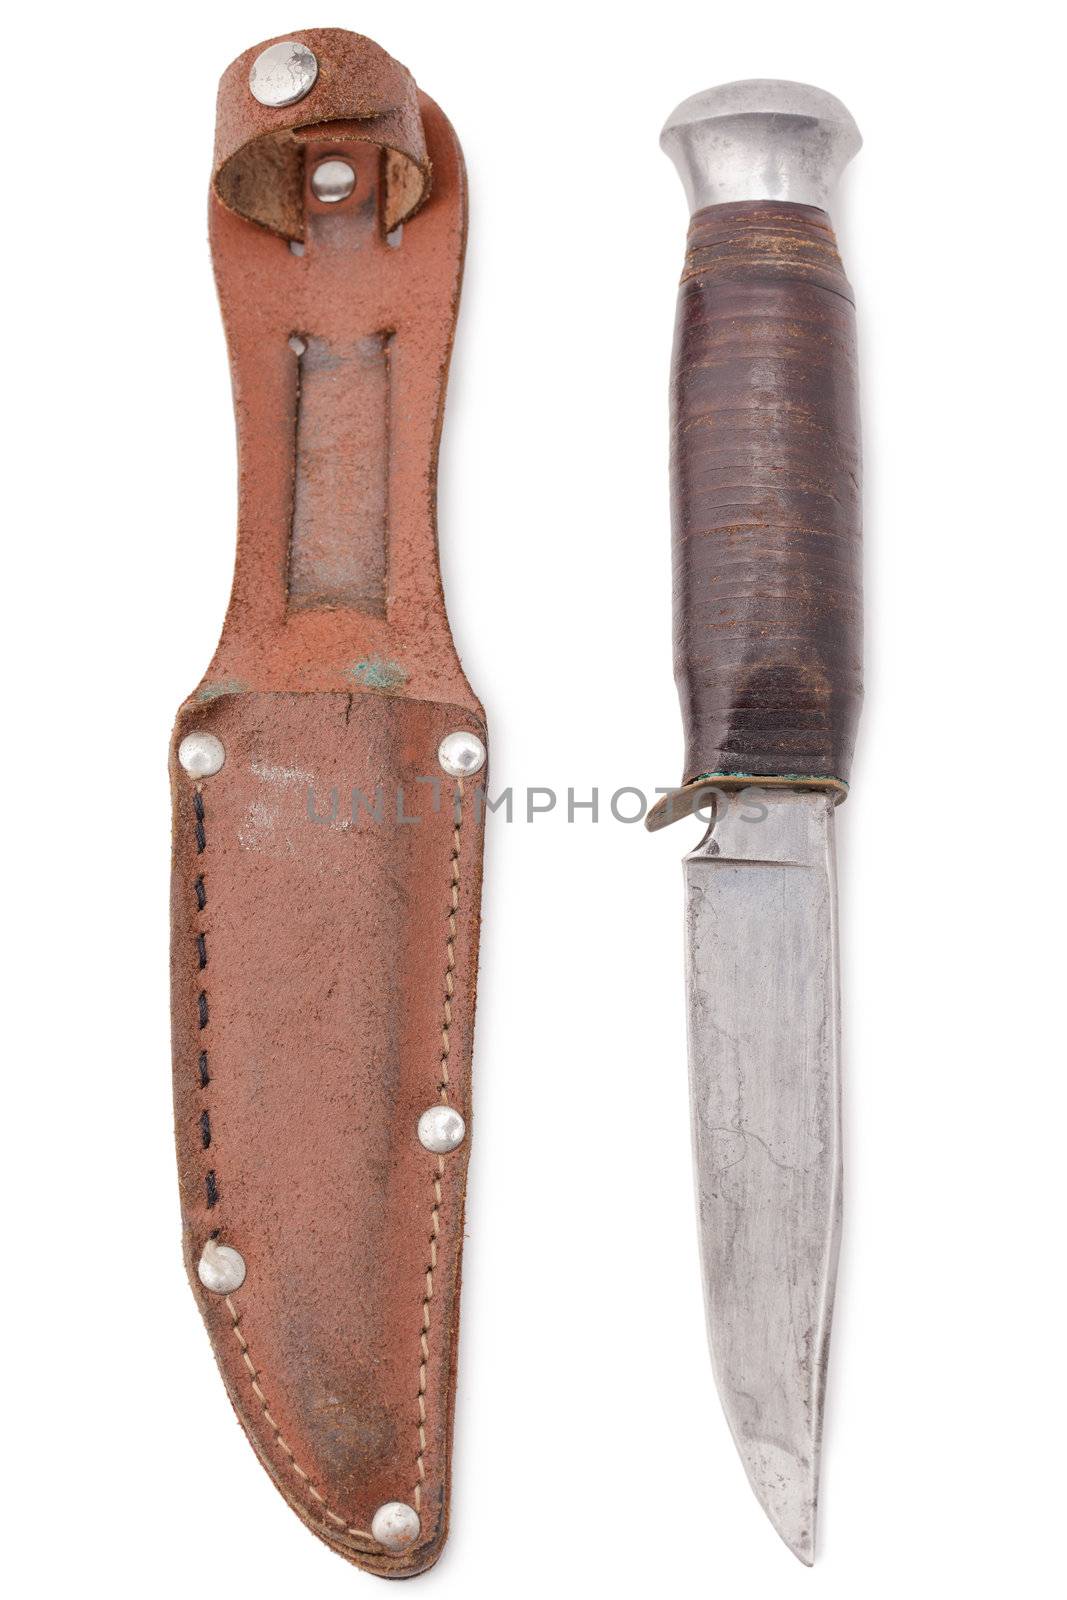 Image of vintage hunting knife against white background